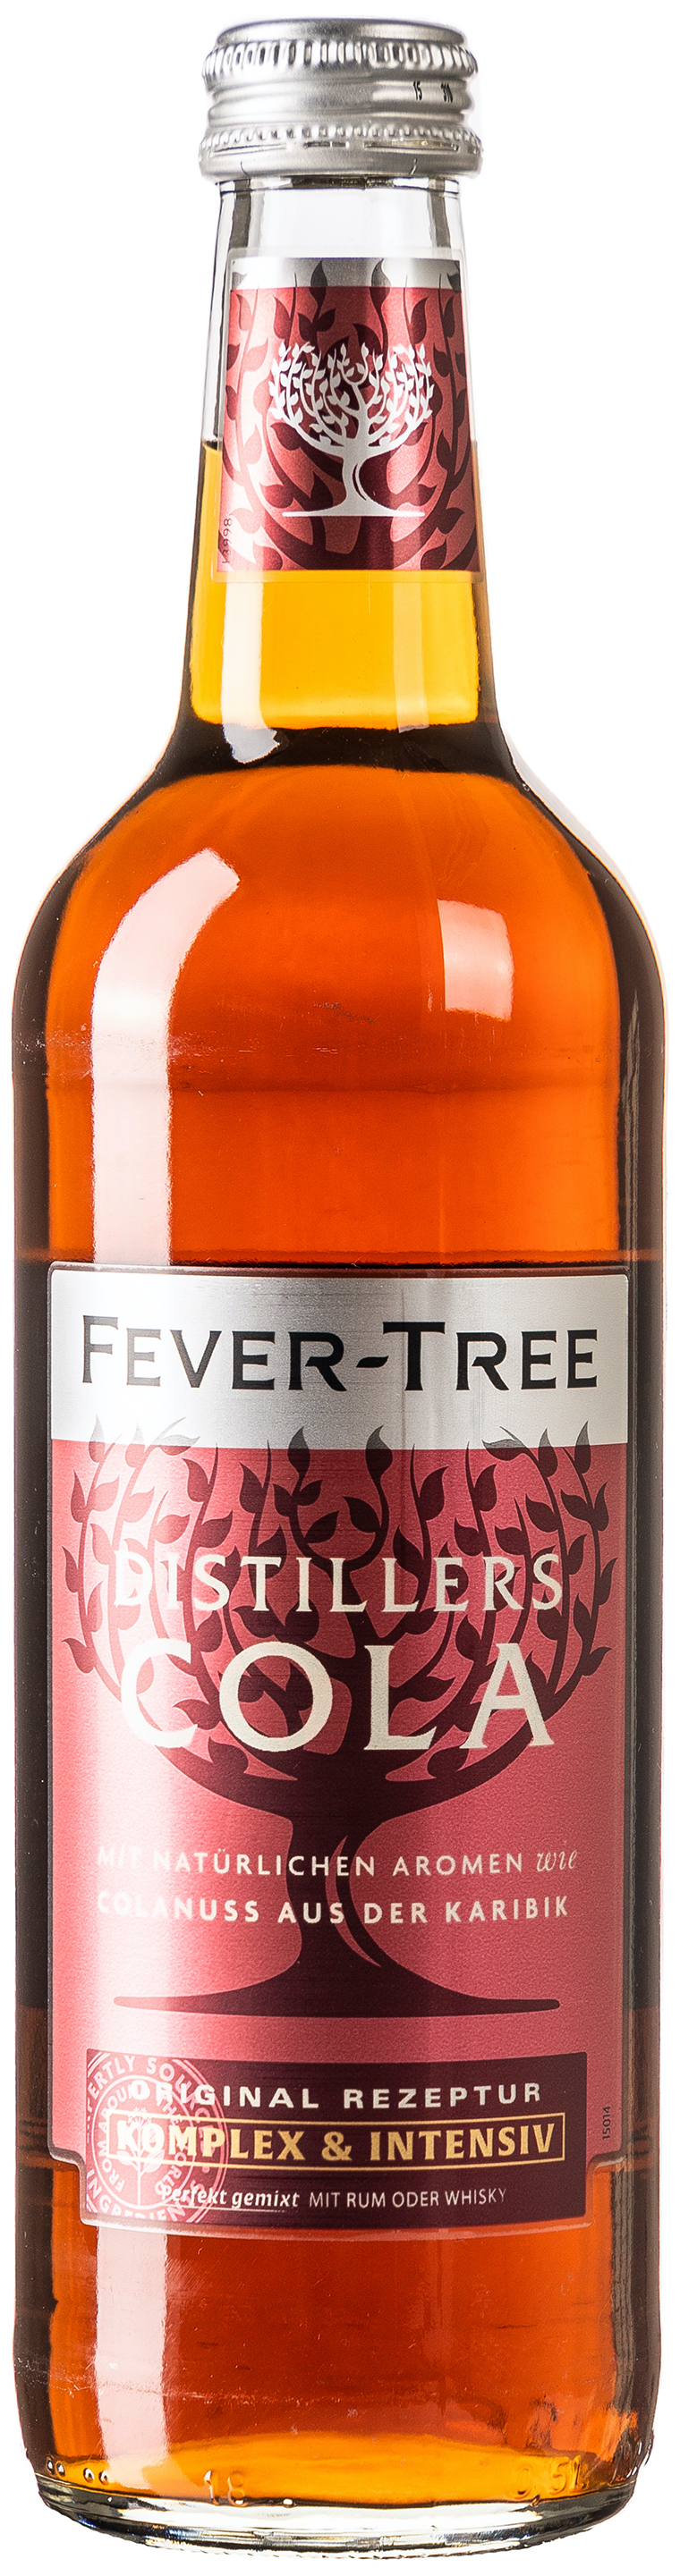 Fever Tree Distillers Cola 0,5L MEHRWEG 